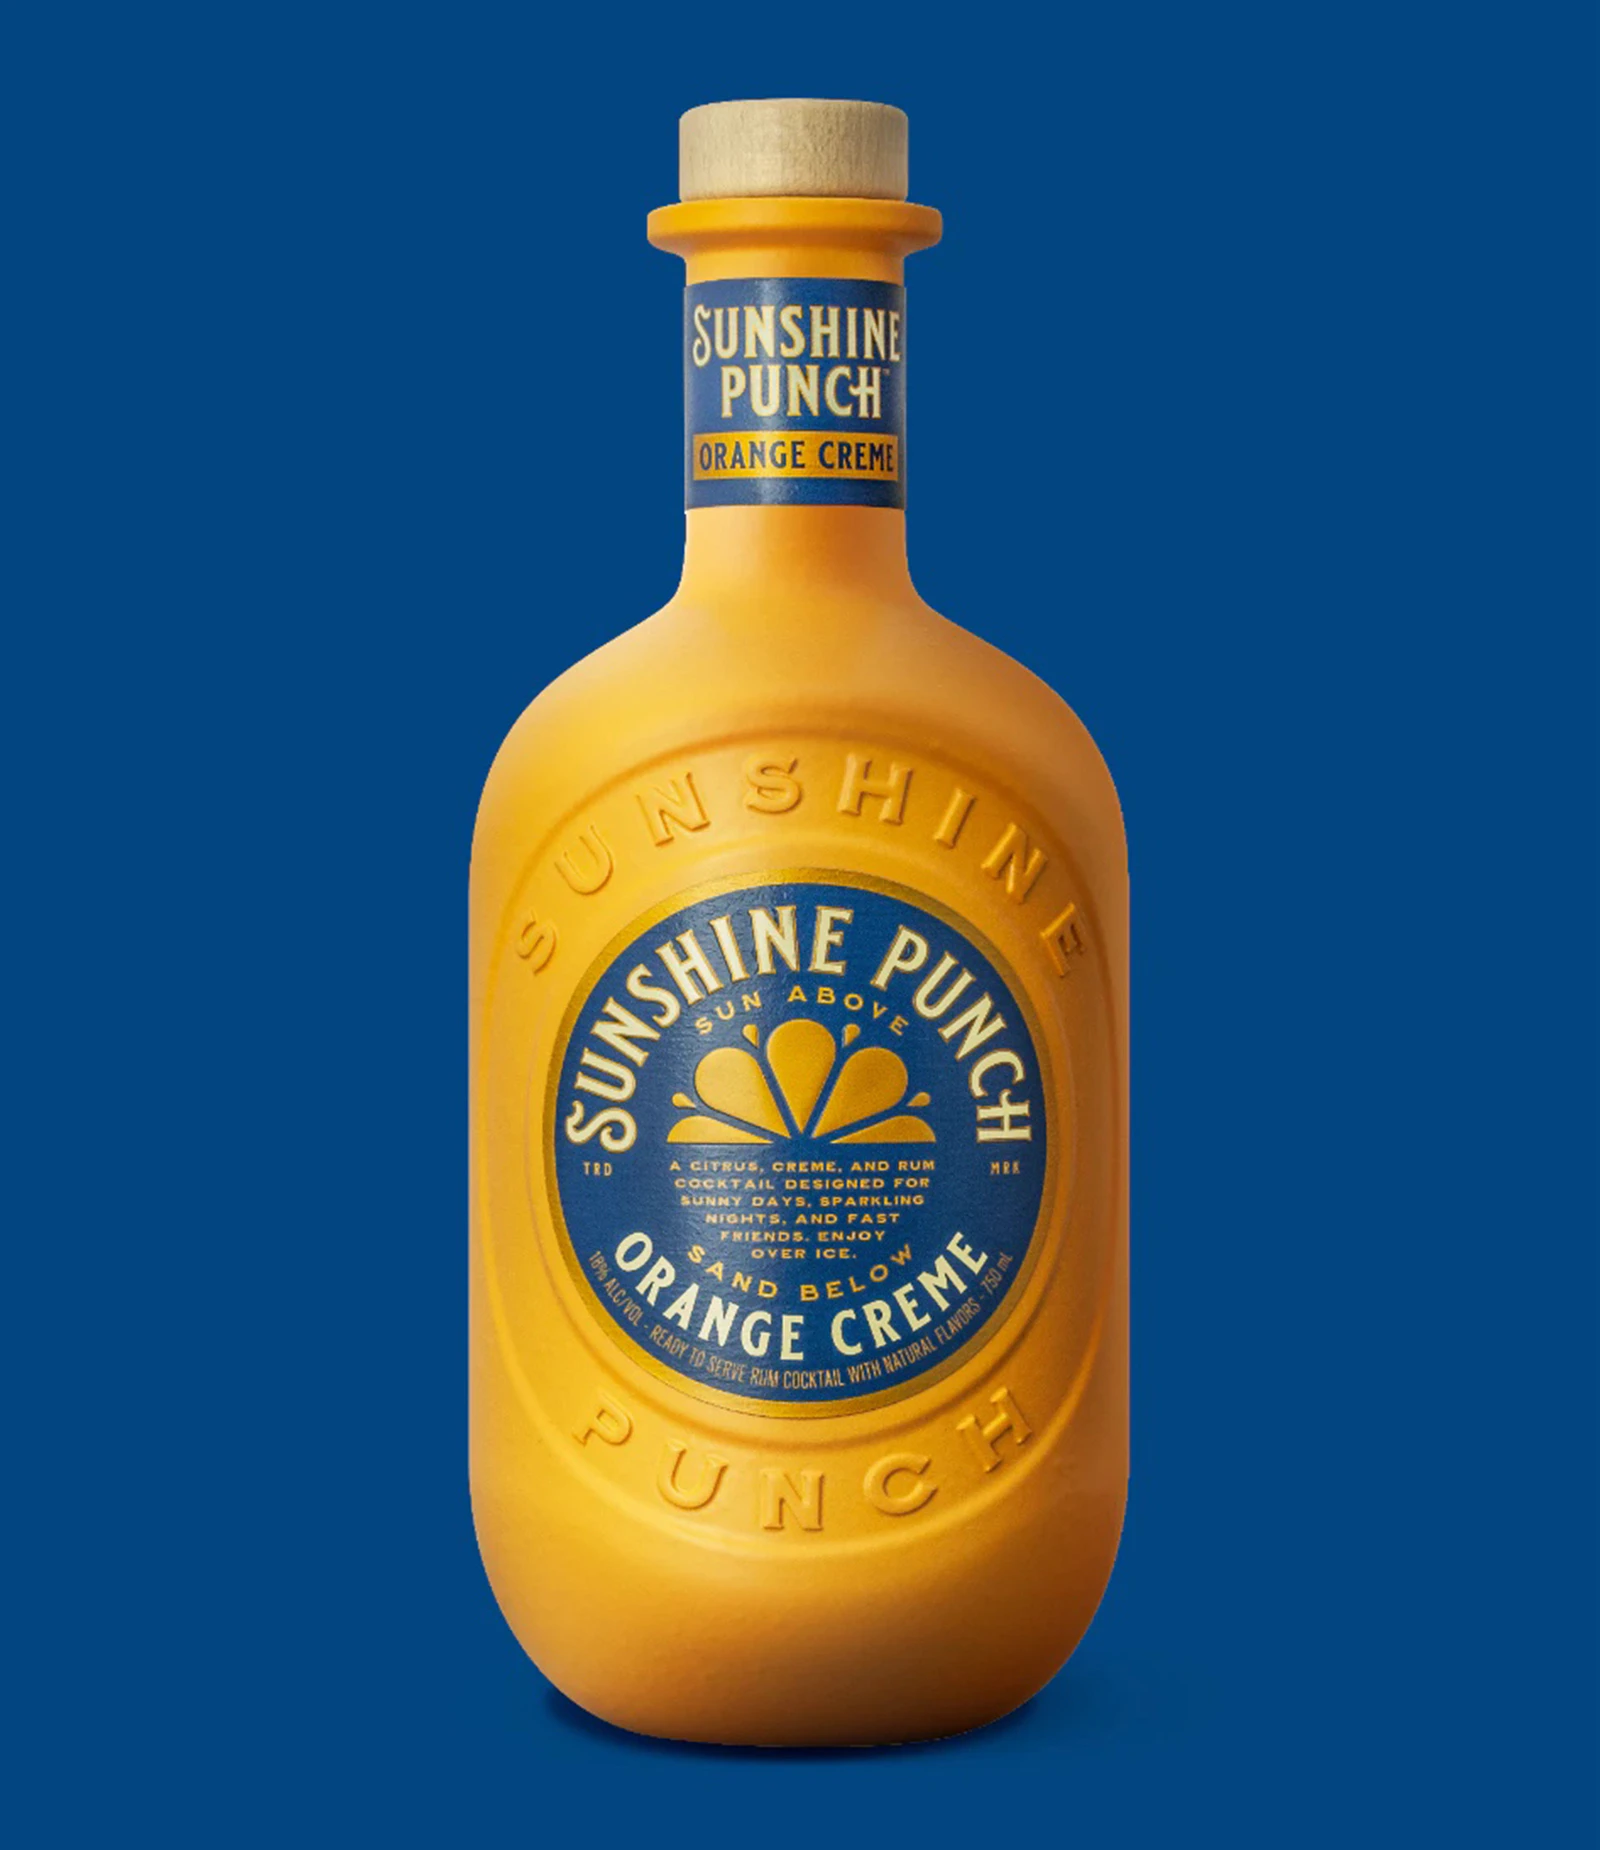 Orange and blue bottle of Sunshine Punch Orange Creme cocktail on a blue background